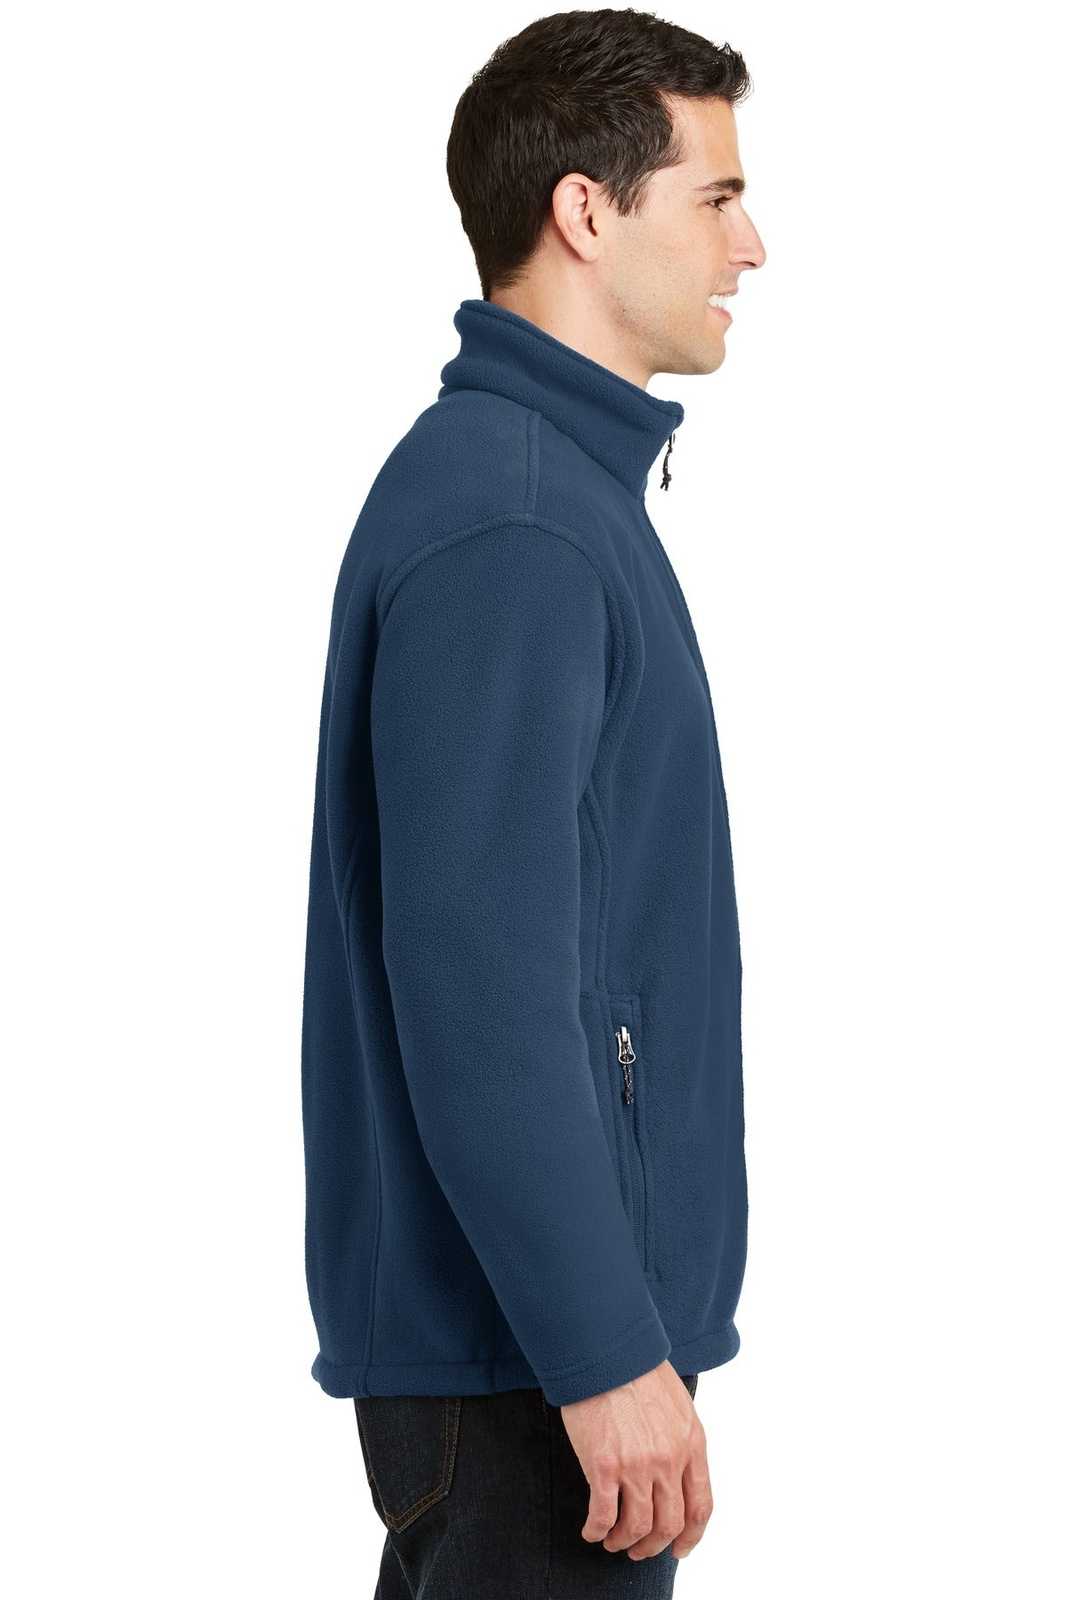 Port Authority F217 Value Fleece Jacket - Insignia Blue - HIT a Double - 3